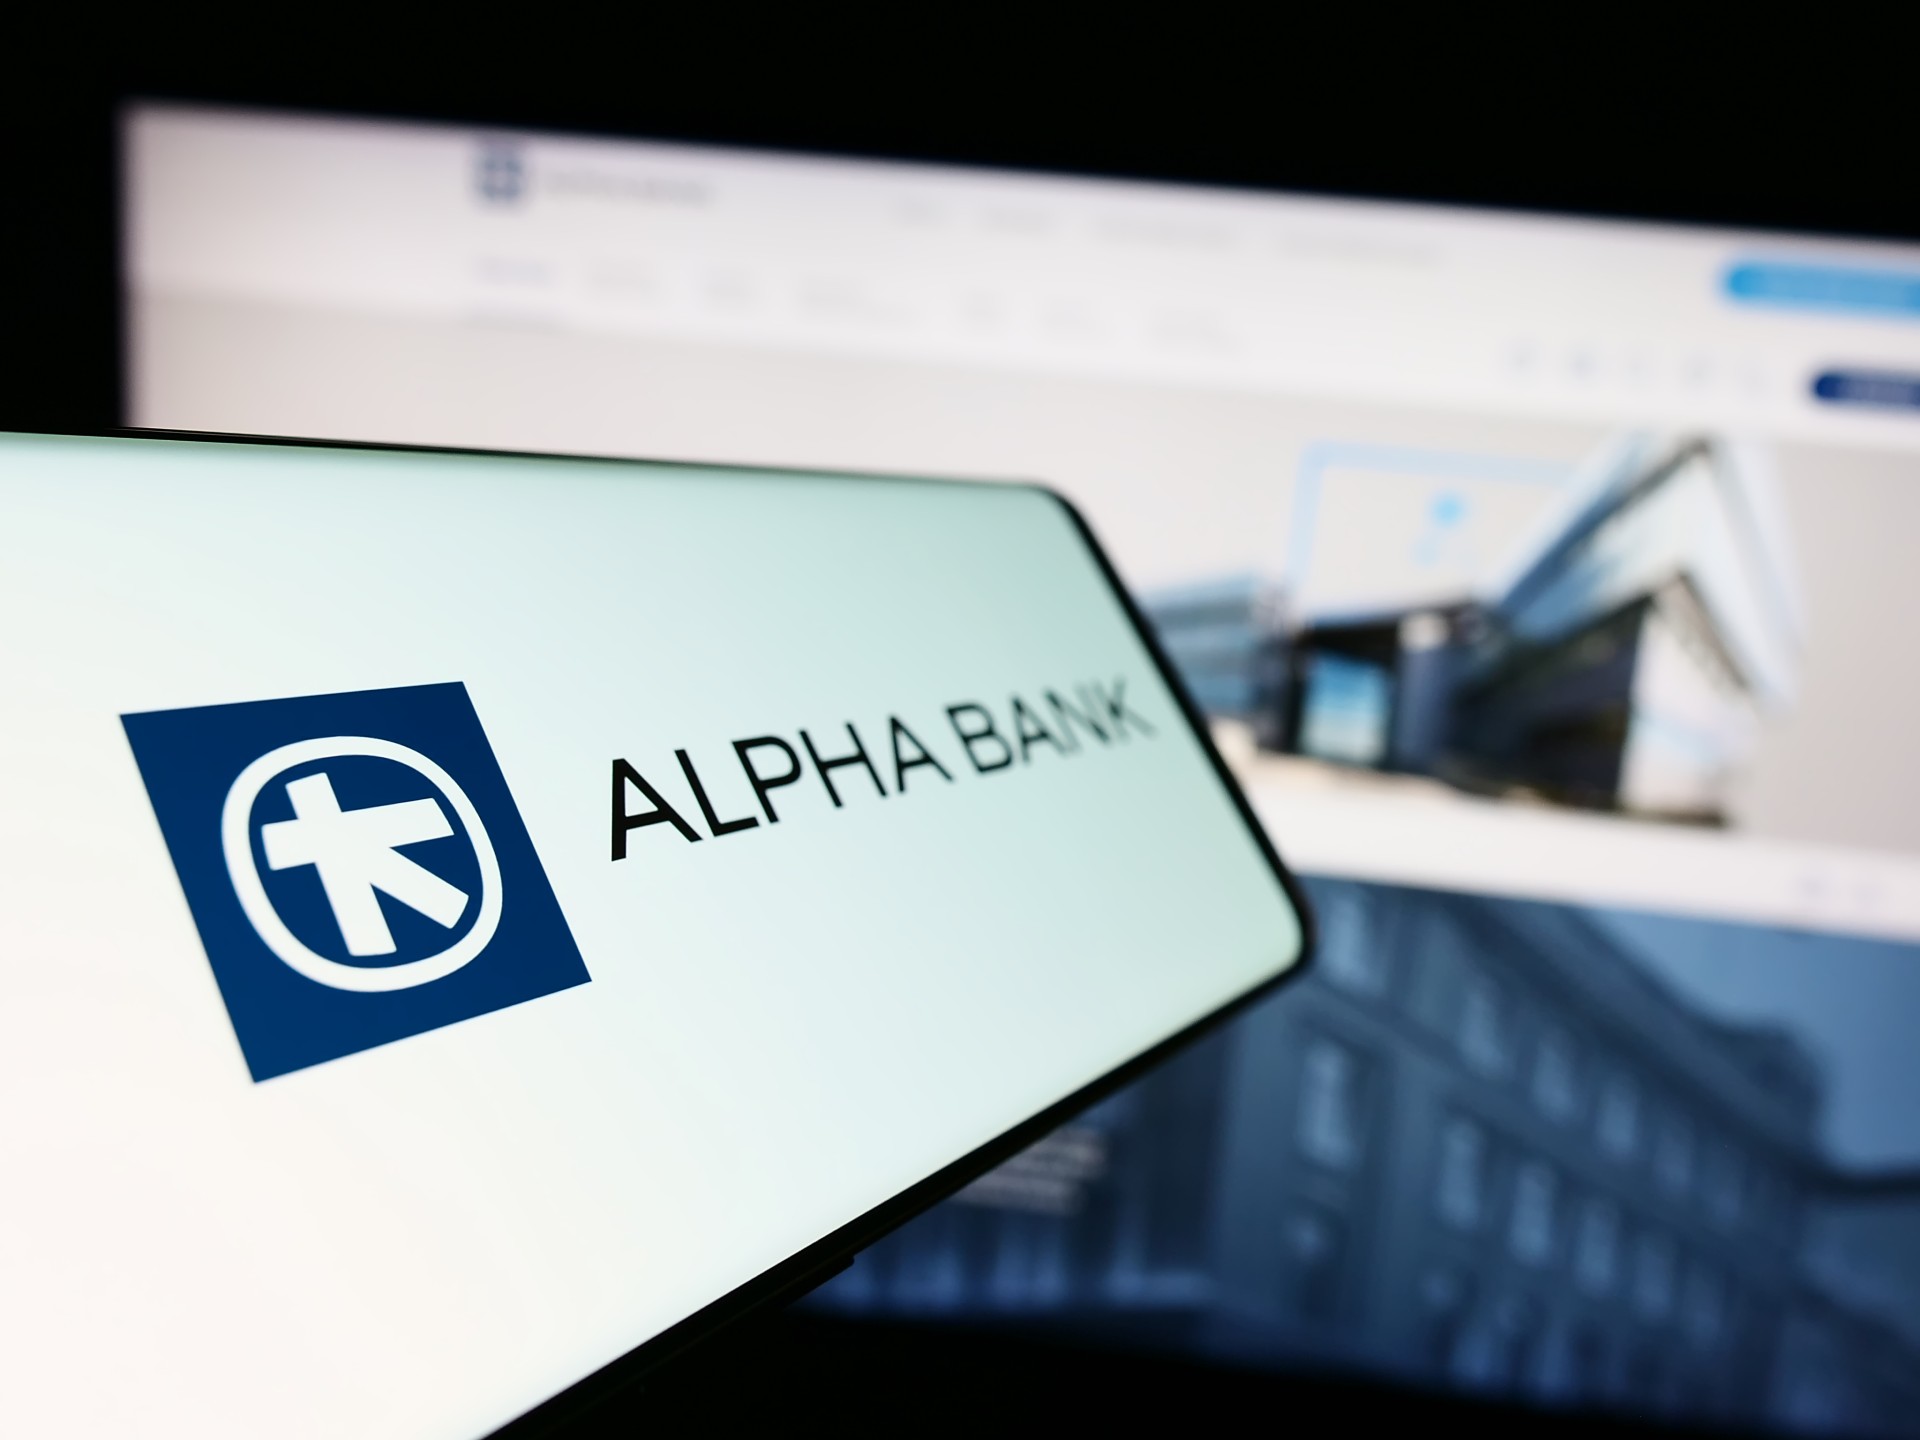 Alpha Bank: Κέρδη 322 εκατ. ευρώ στο εξάμηνο, μέρισμα 35% - Το μήνυμα Ψάλτη